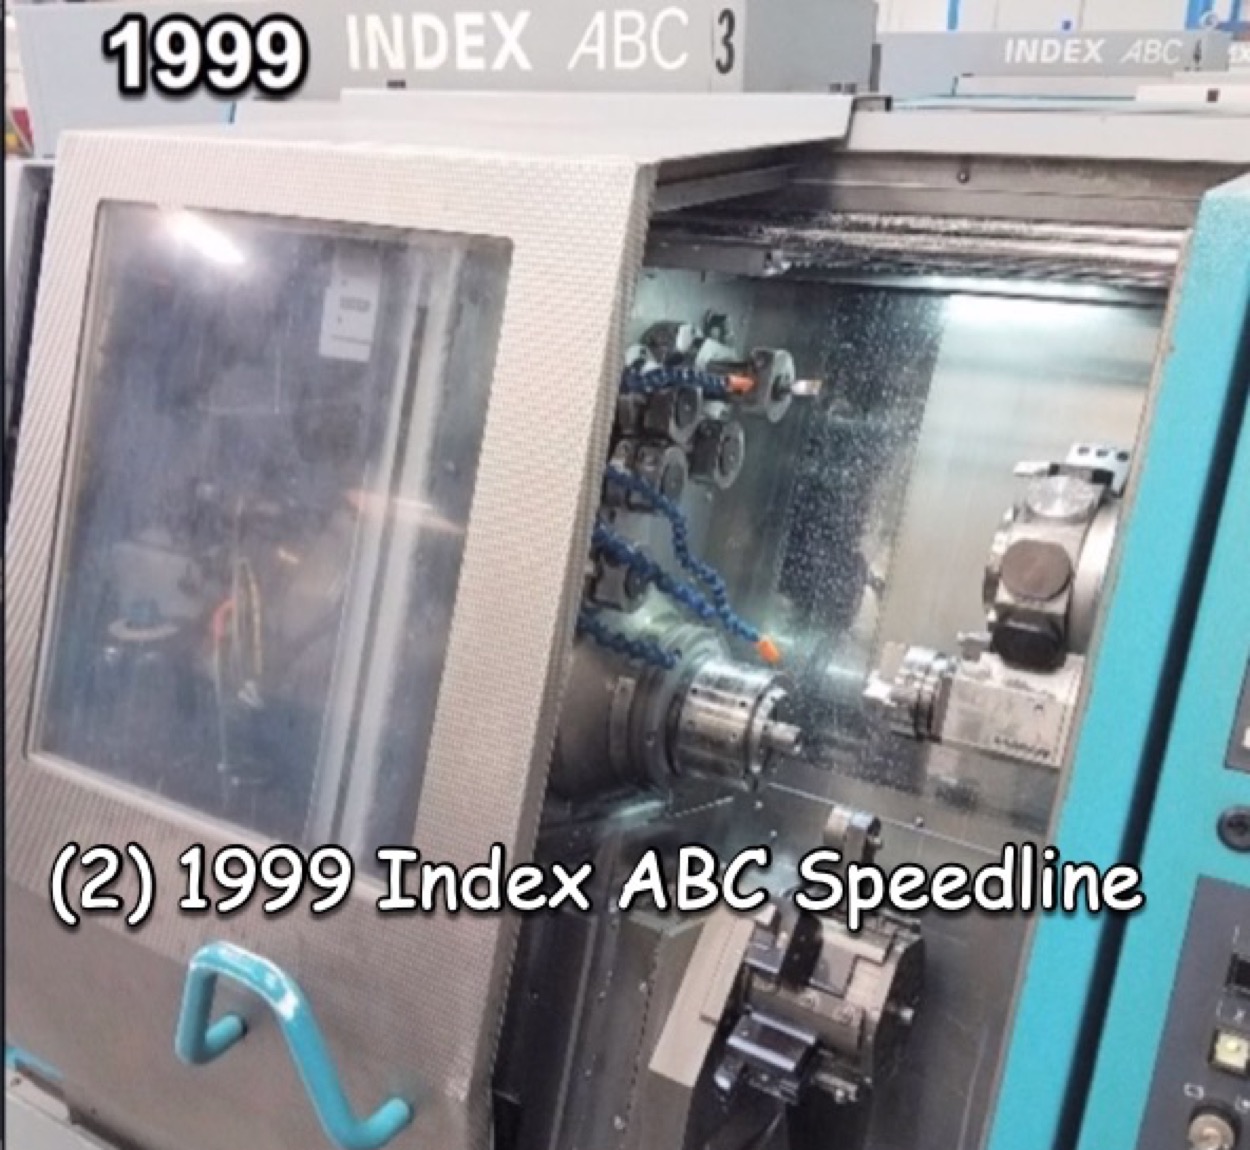 Index ABC Speedline 1999